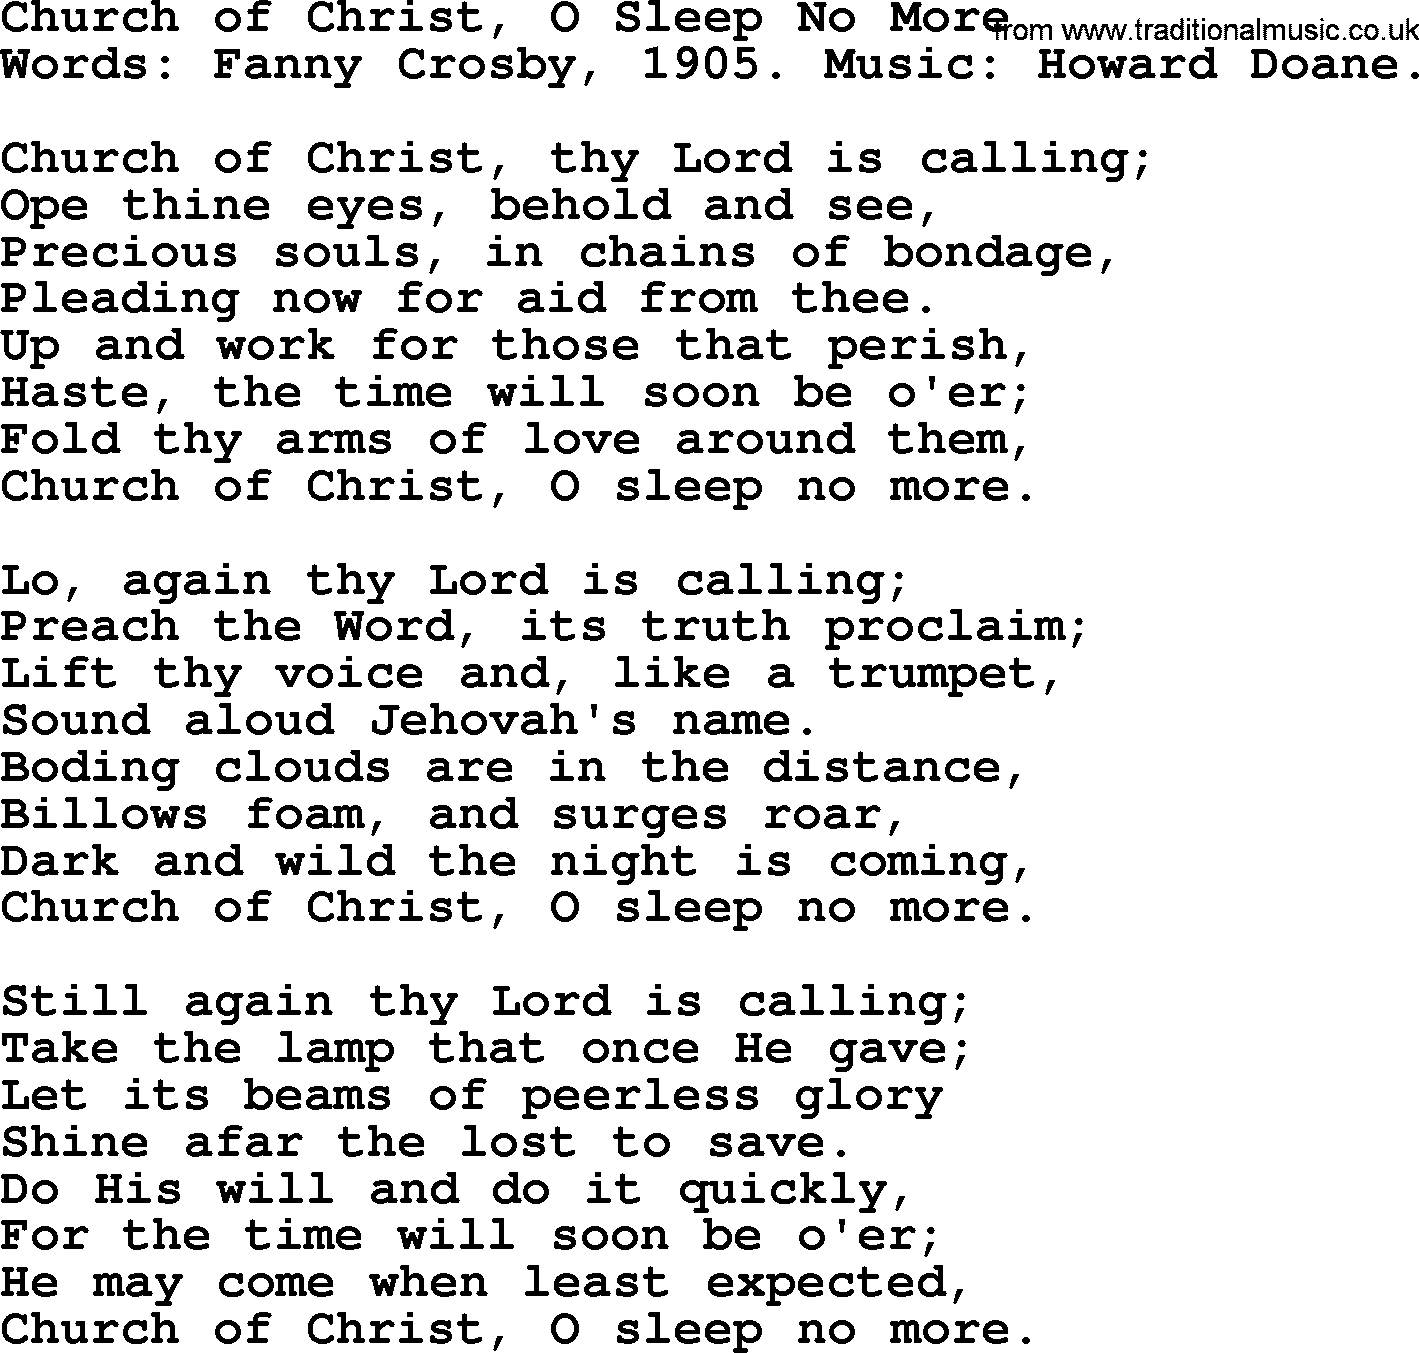 Fanny Crosby song: Church Of Christ, O Sleep No More, lyrics